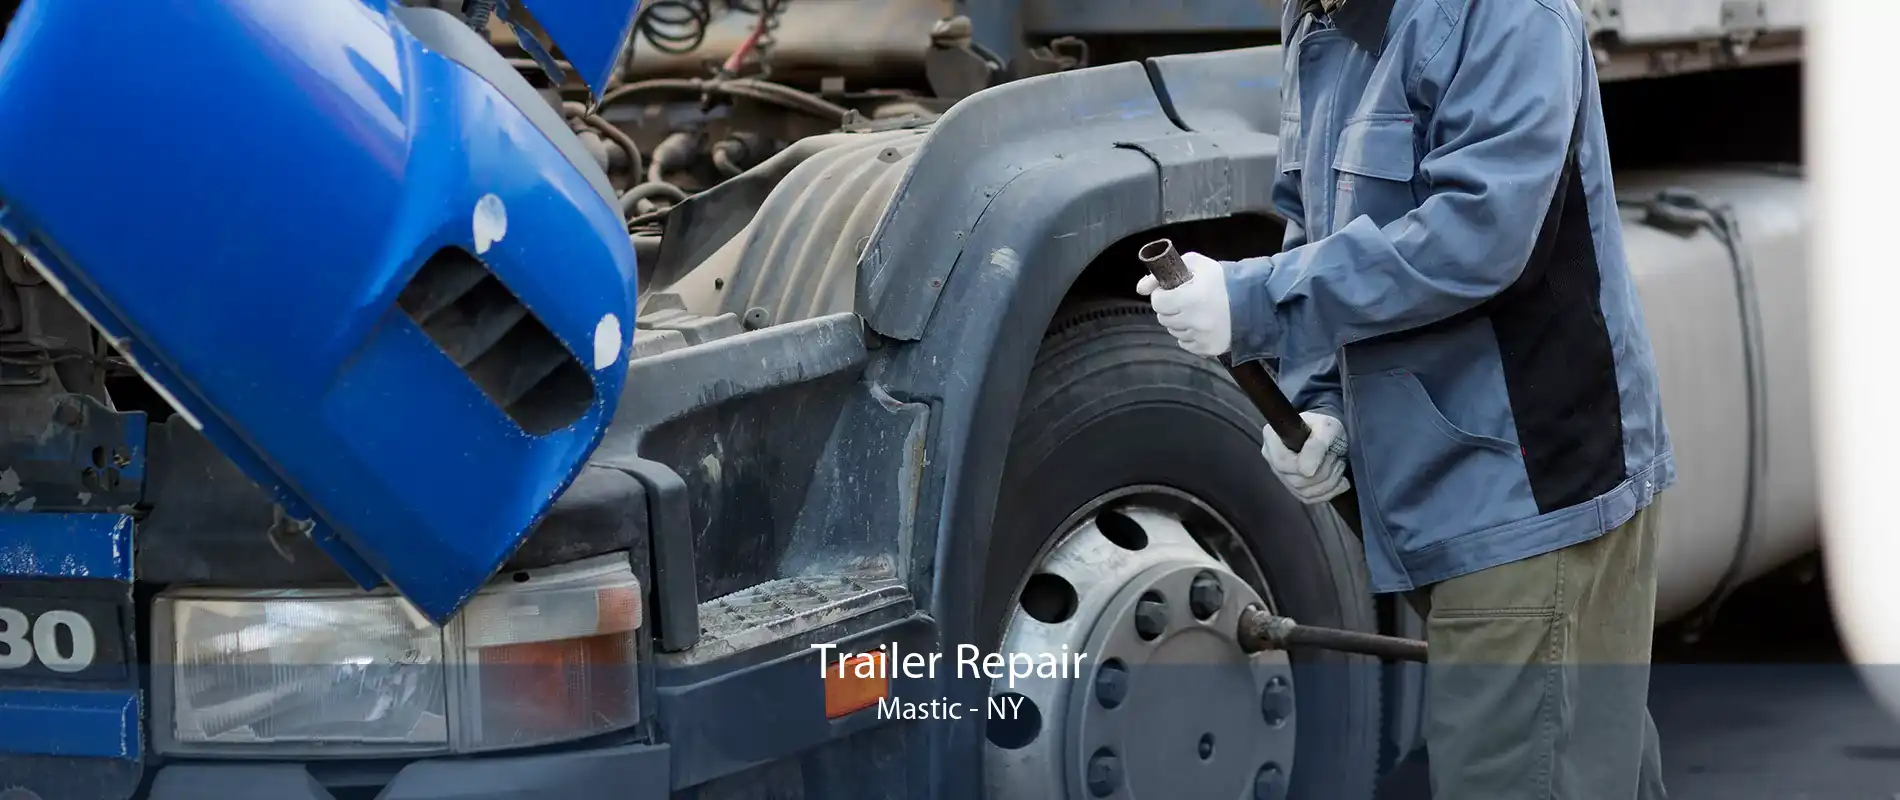 Trailer Repair Mastic - NY